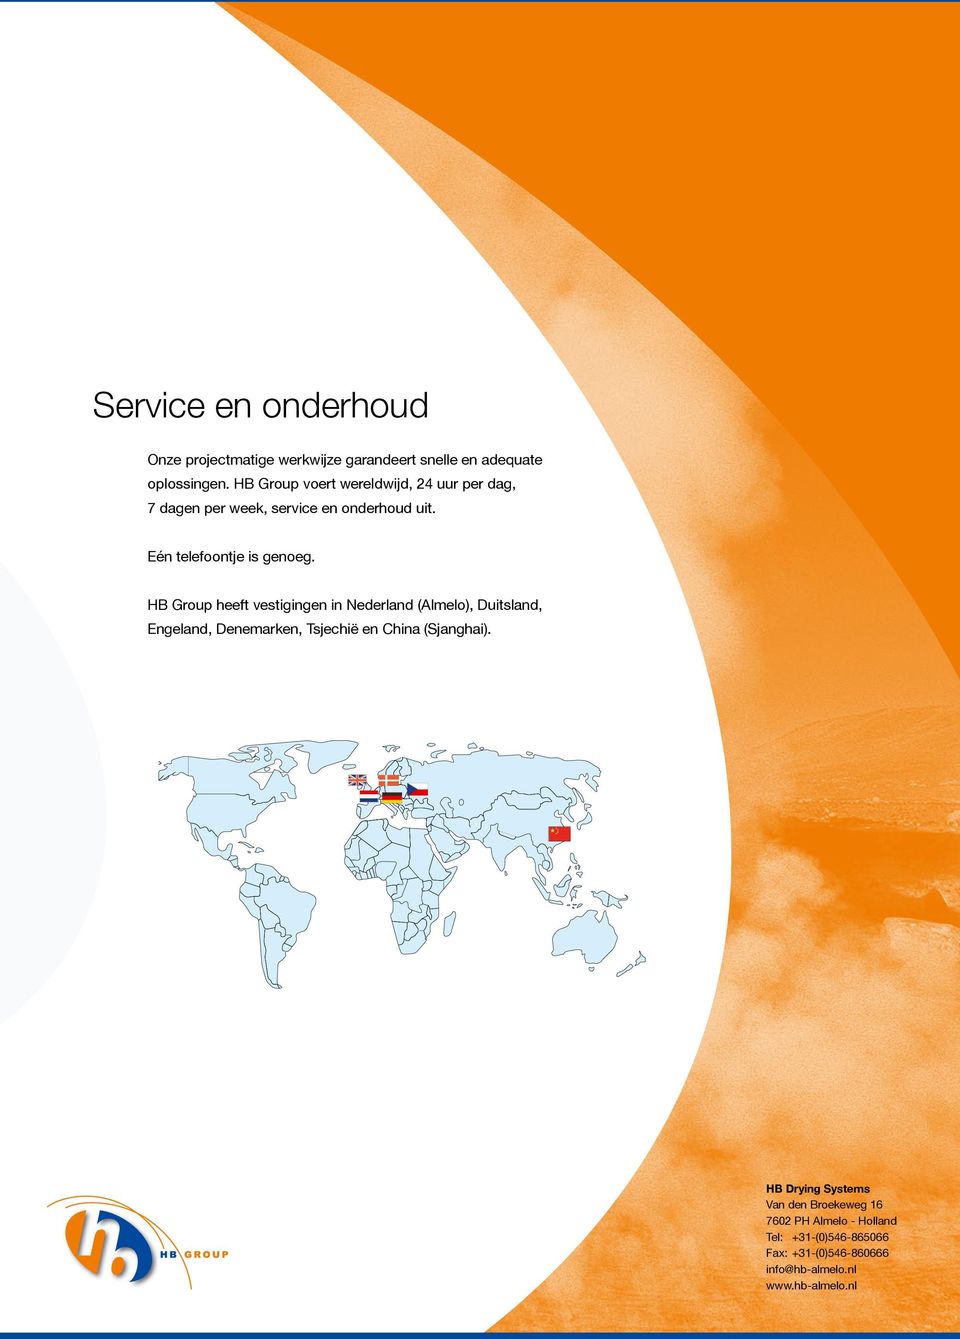 HB Group heeft vestigingen in Nederland (Almelo), Duitsland, Engeland, Denemarken, Tsjechië en China (Sjanghai).